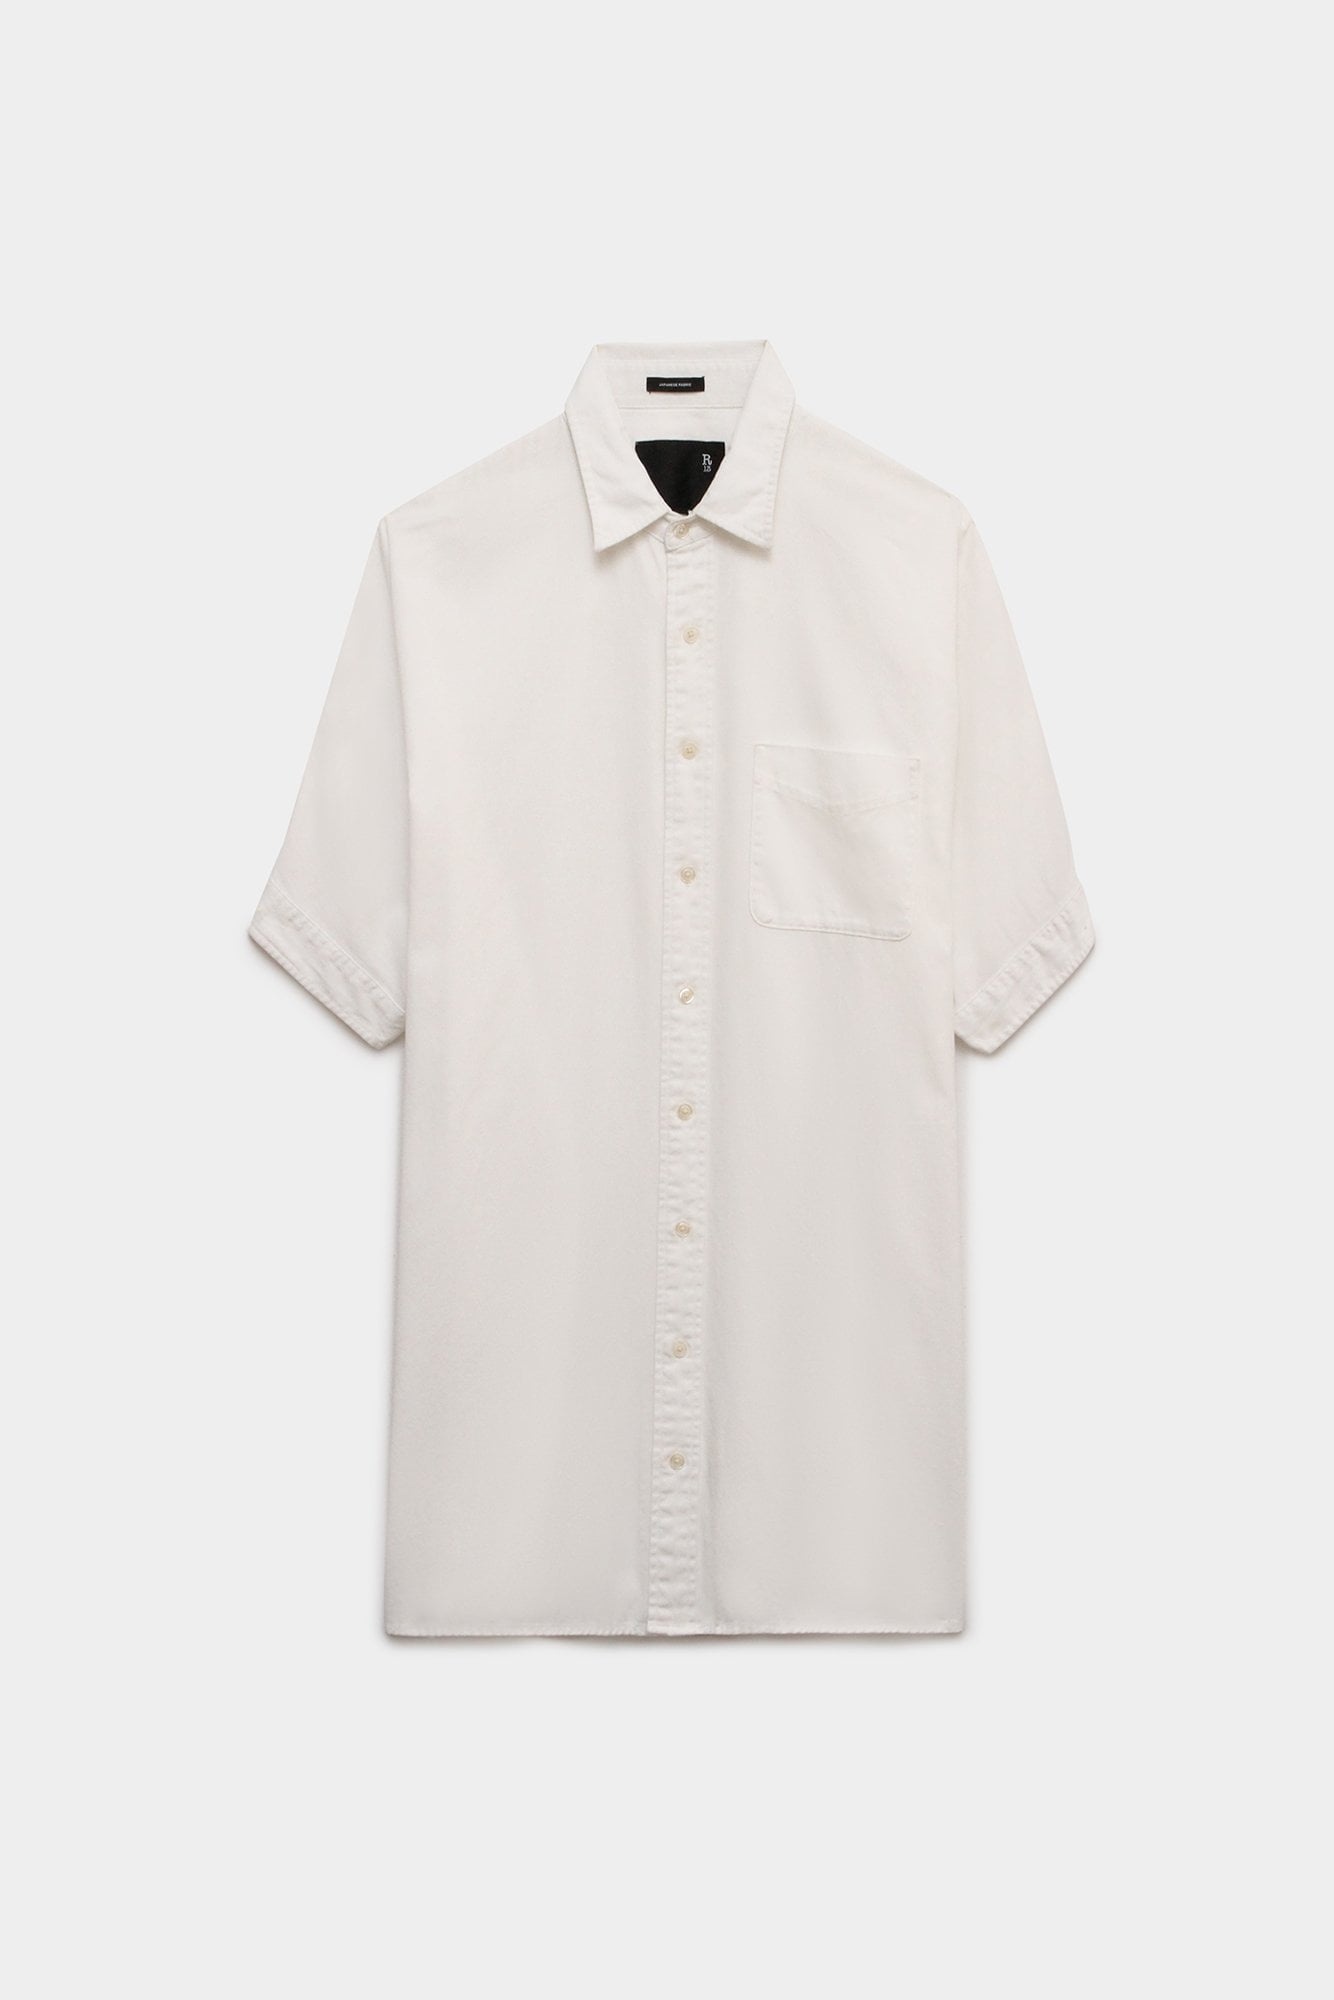 Oversized Boxy Button Up Dress - White | R13 Denim - 1